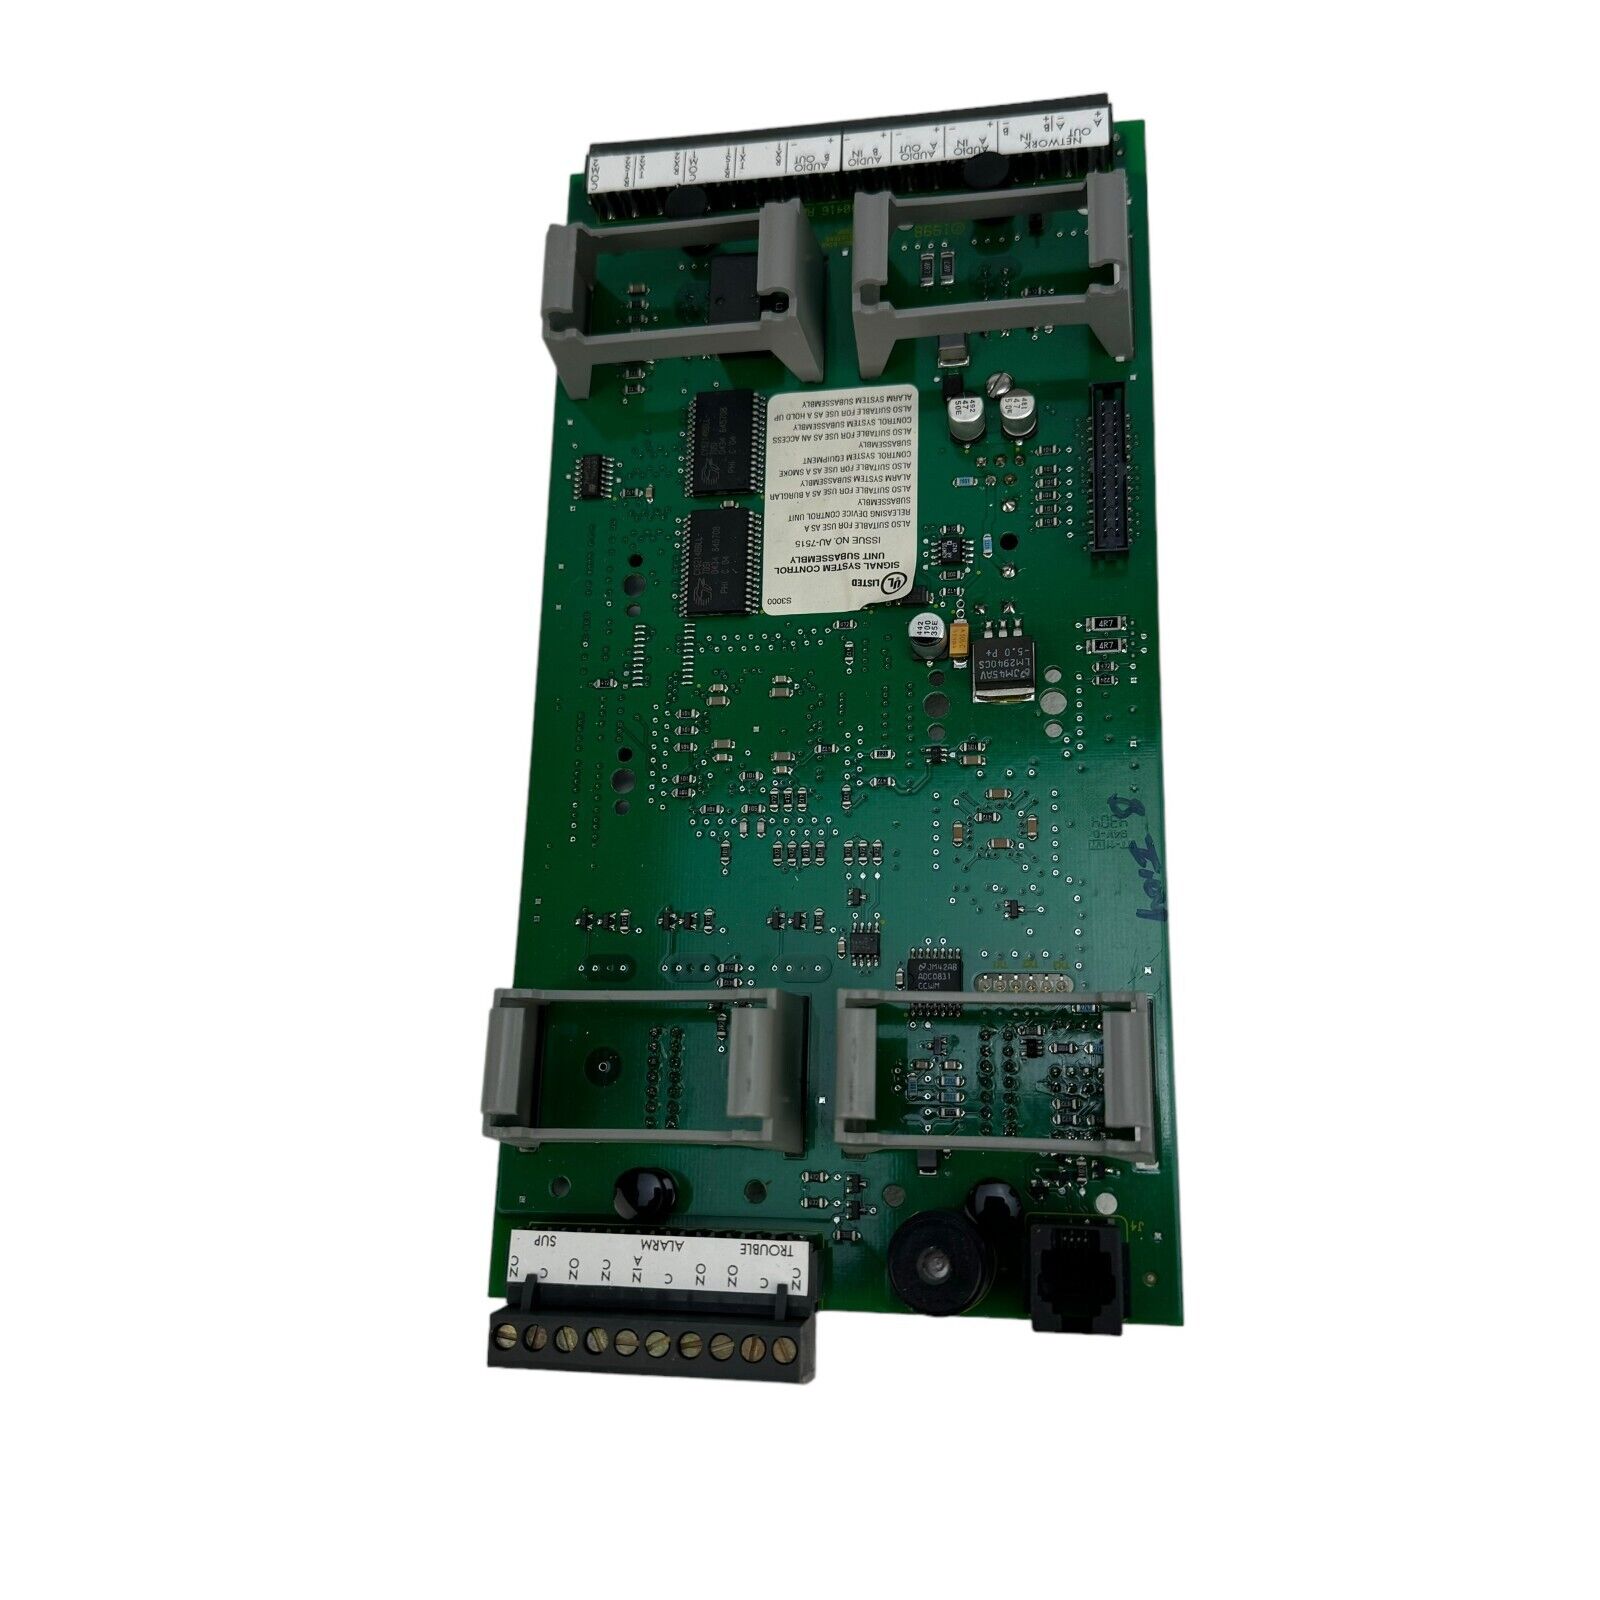 Edwards EST 3-CPU 1 Communications Processing Fire Alarm Control Board